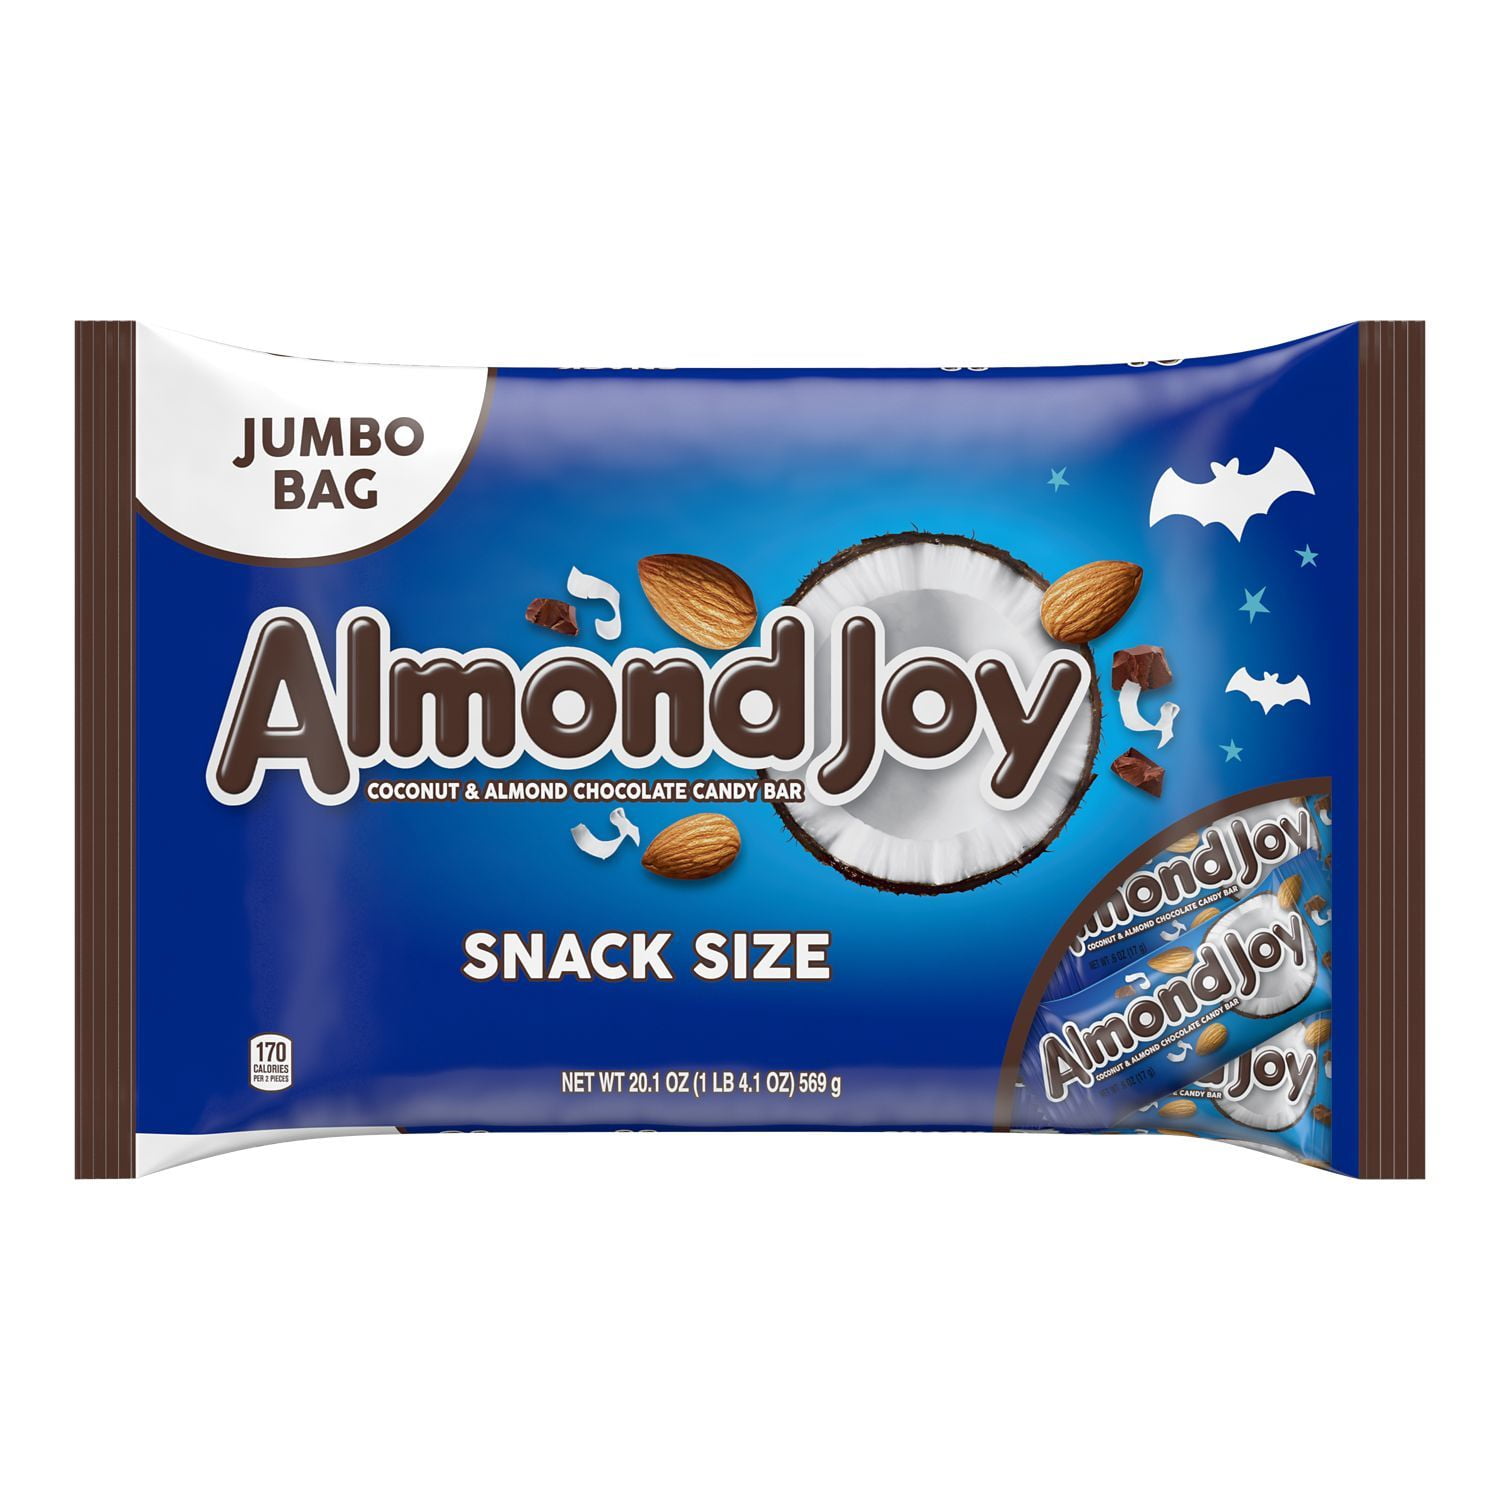 ALMOND JOY, Halloween Candy, Snack Size Coconut and Almond Chocolate Bars, 20.1 oz, Jumbo Bag